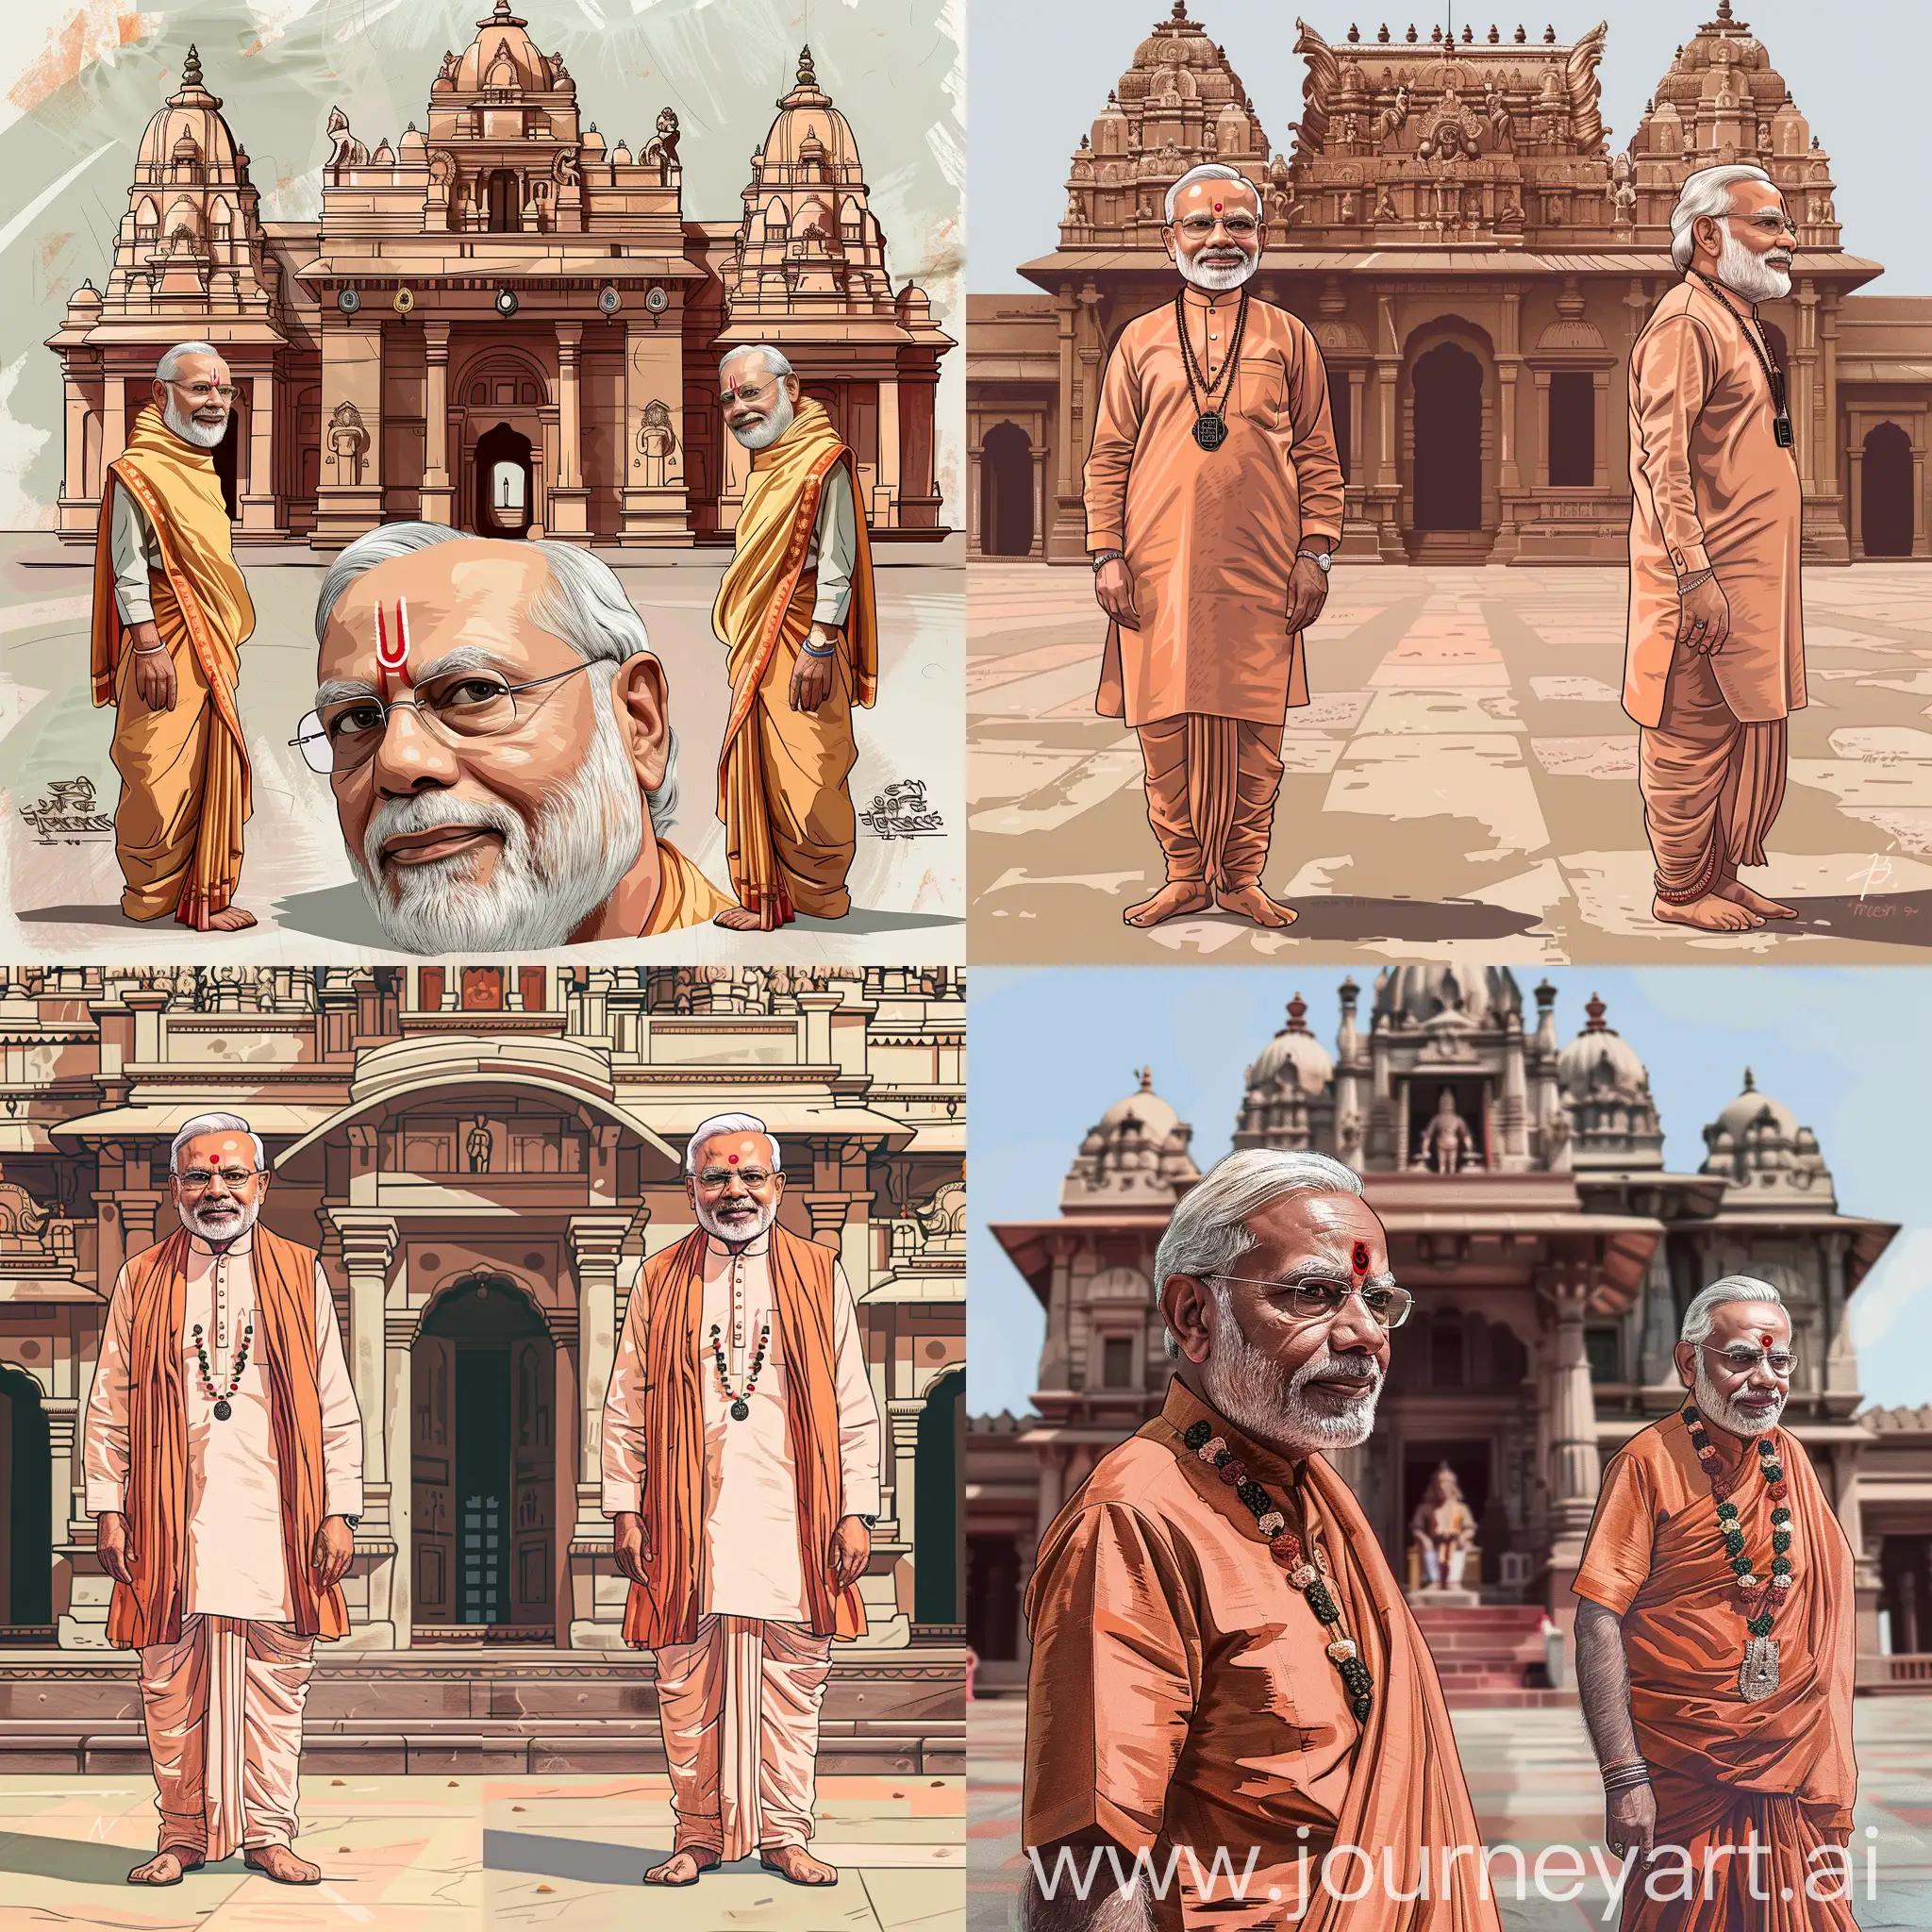 Indian-Prime-Minister-Narendra-Modi-Smirking-in-Traditional-Hindu-Attire-Outside-a-Temple